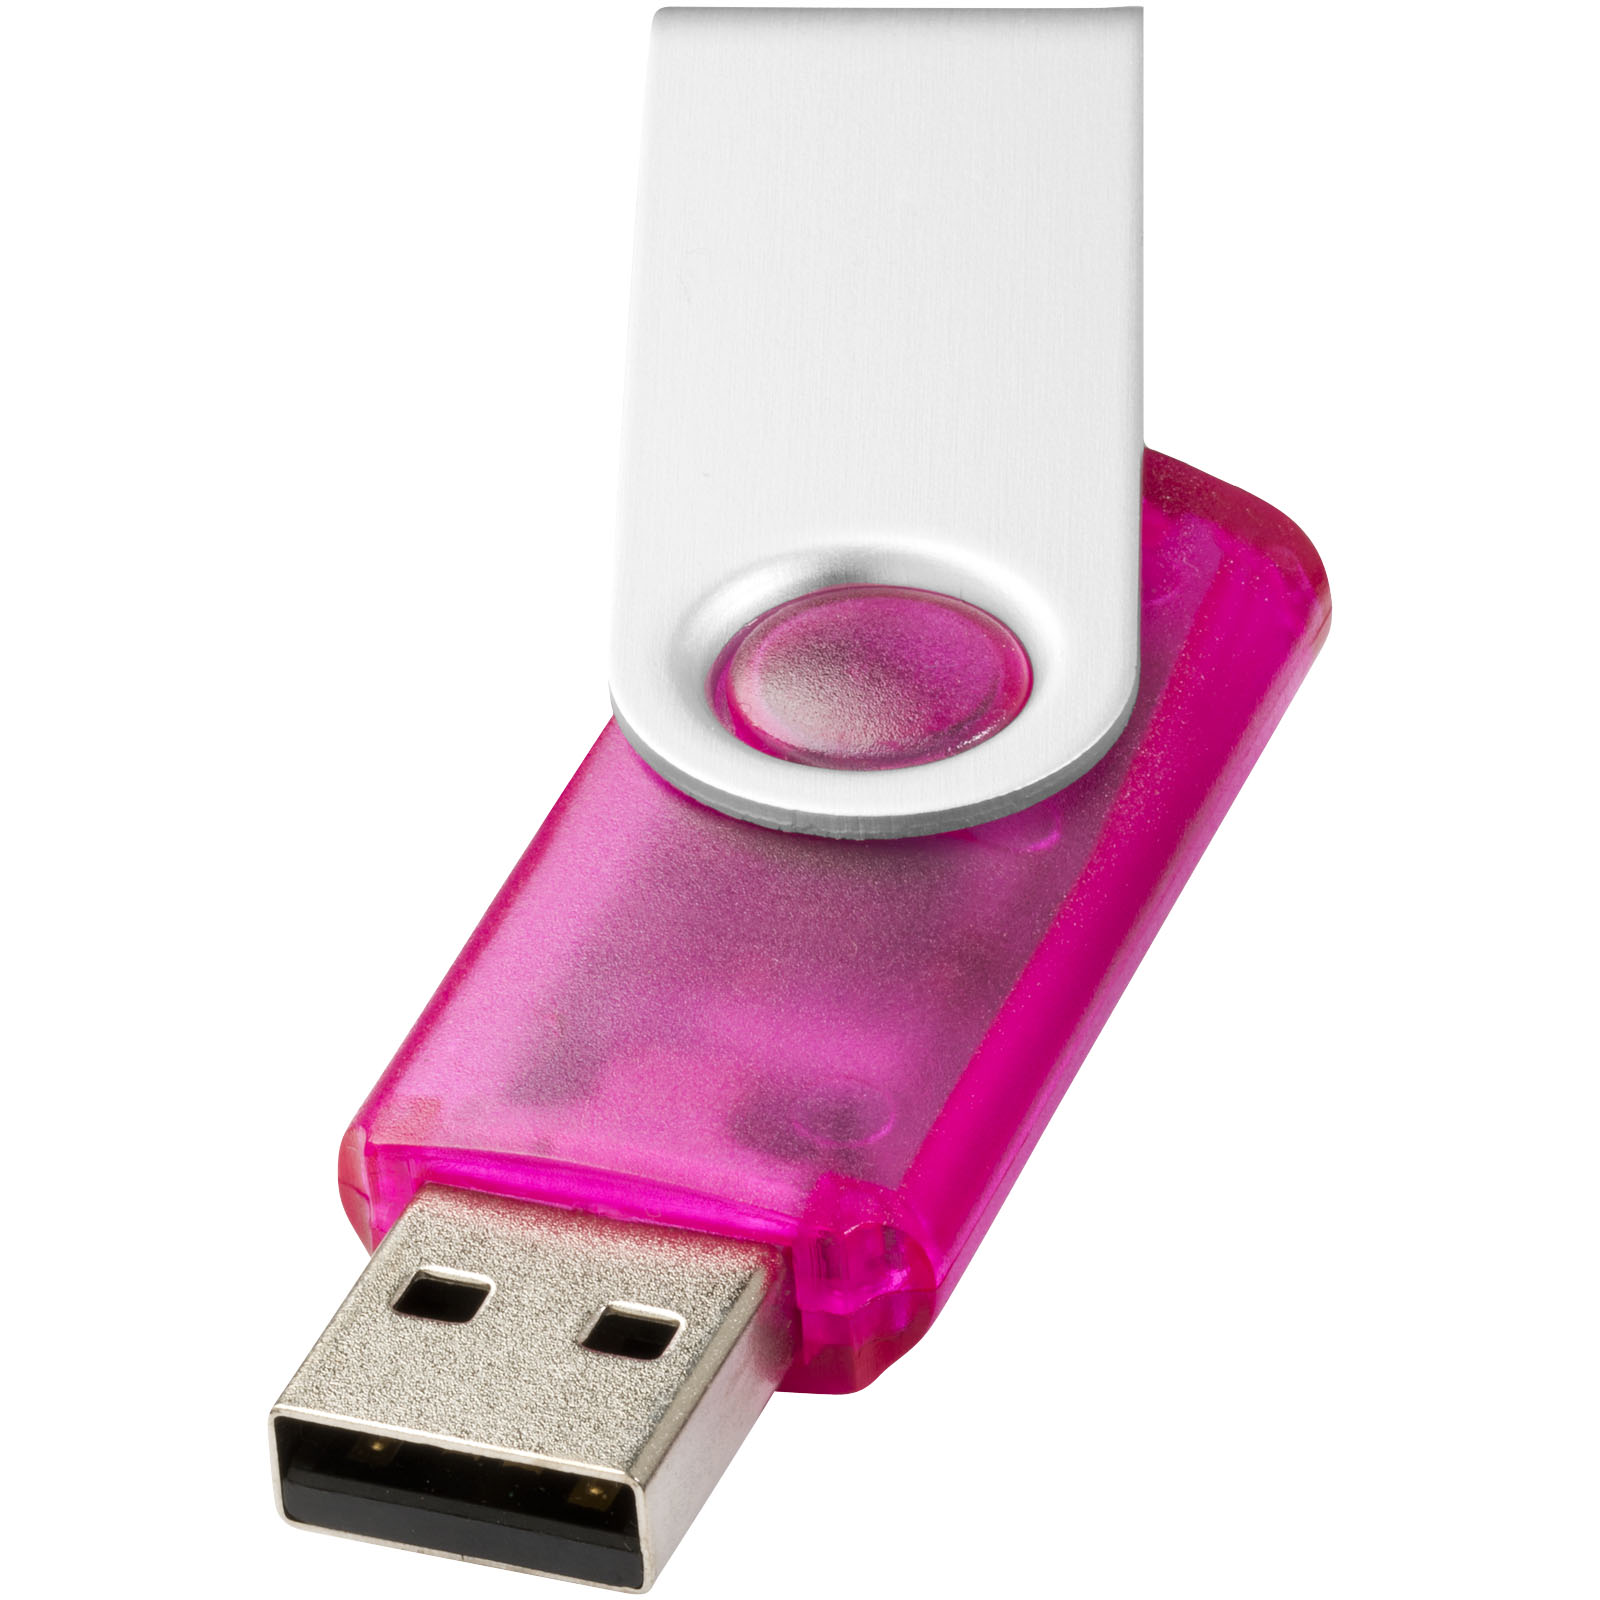 Clé USB rotative translucide de 4 Go - Écouis - Zaprinta France